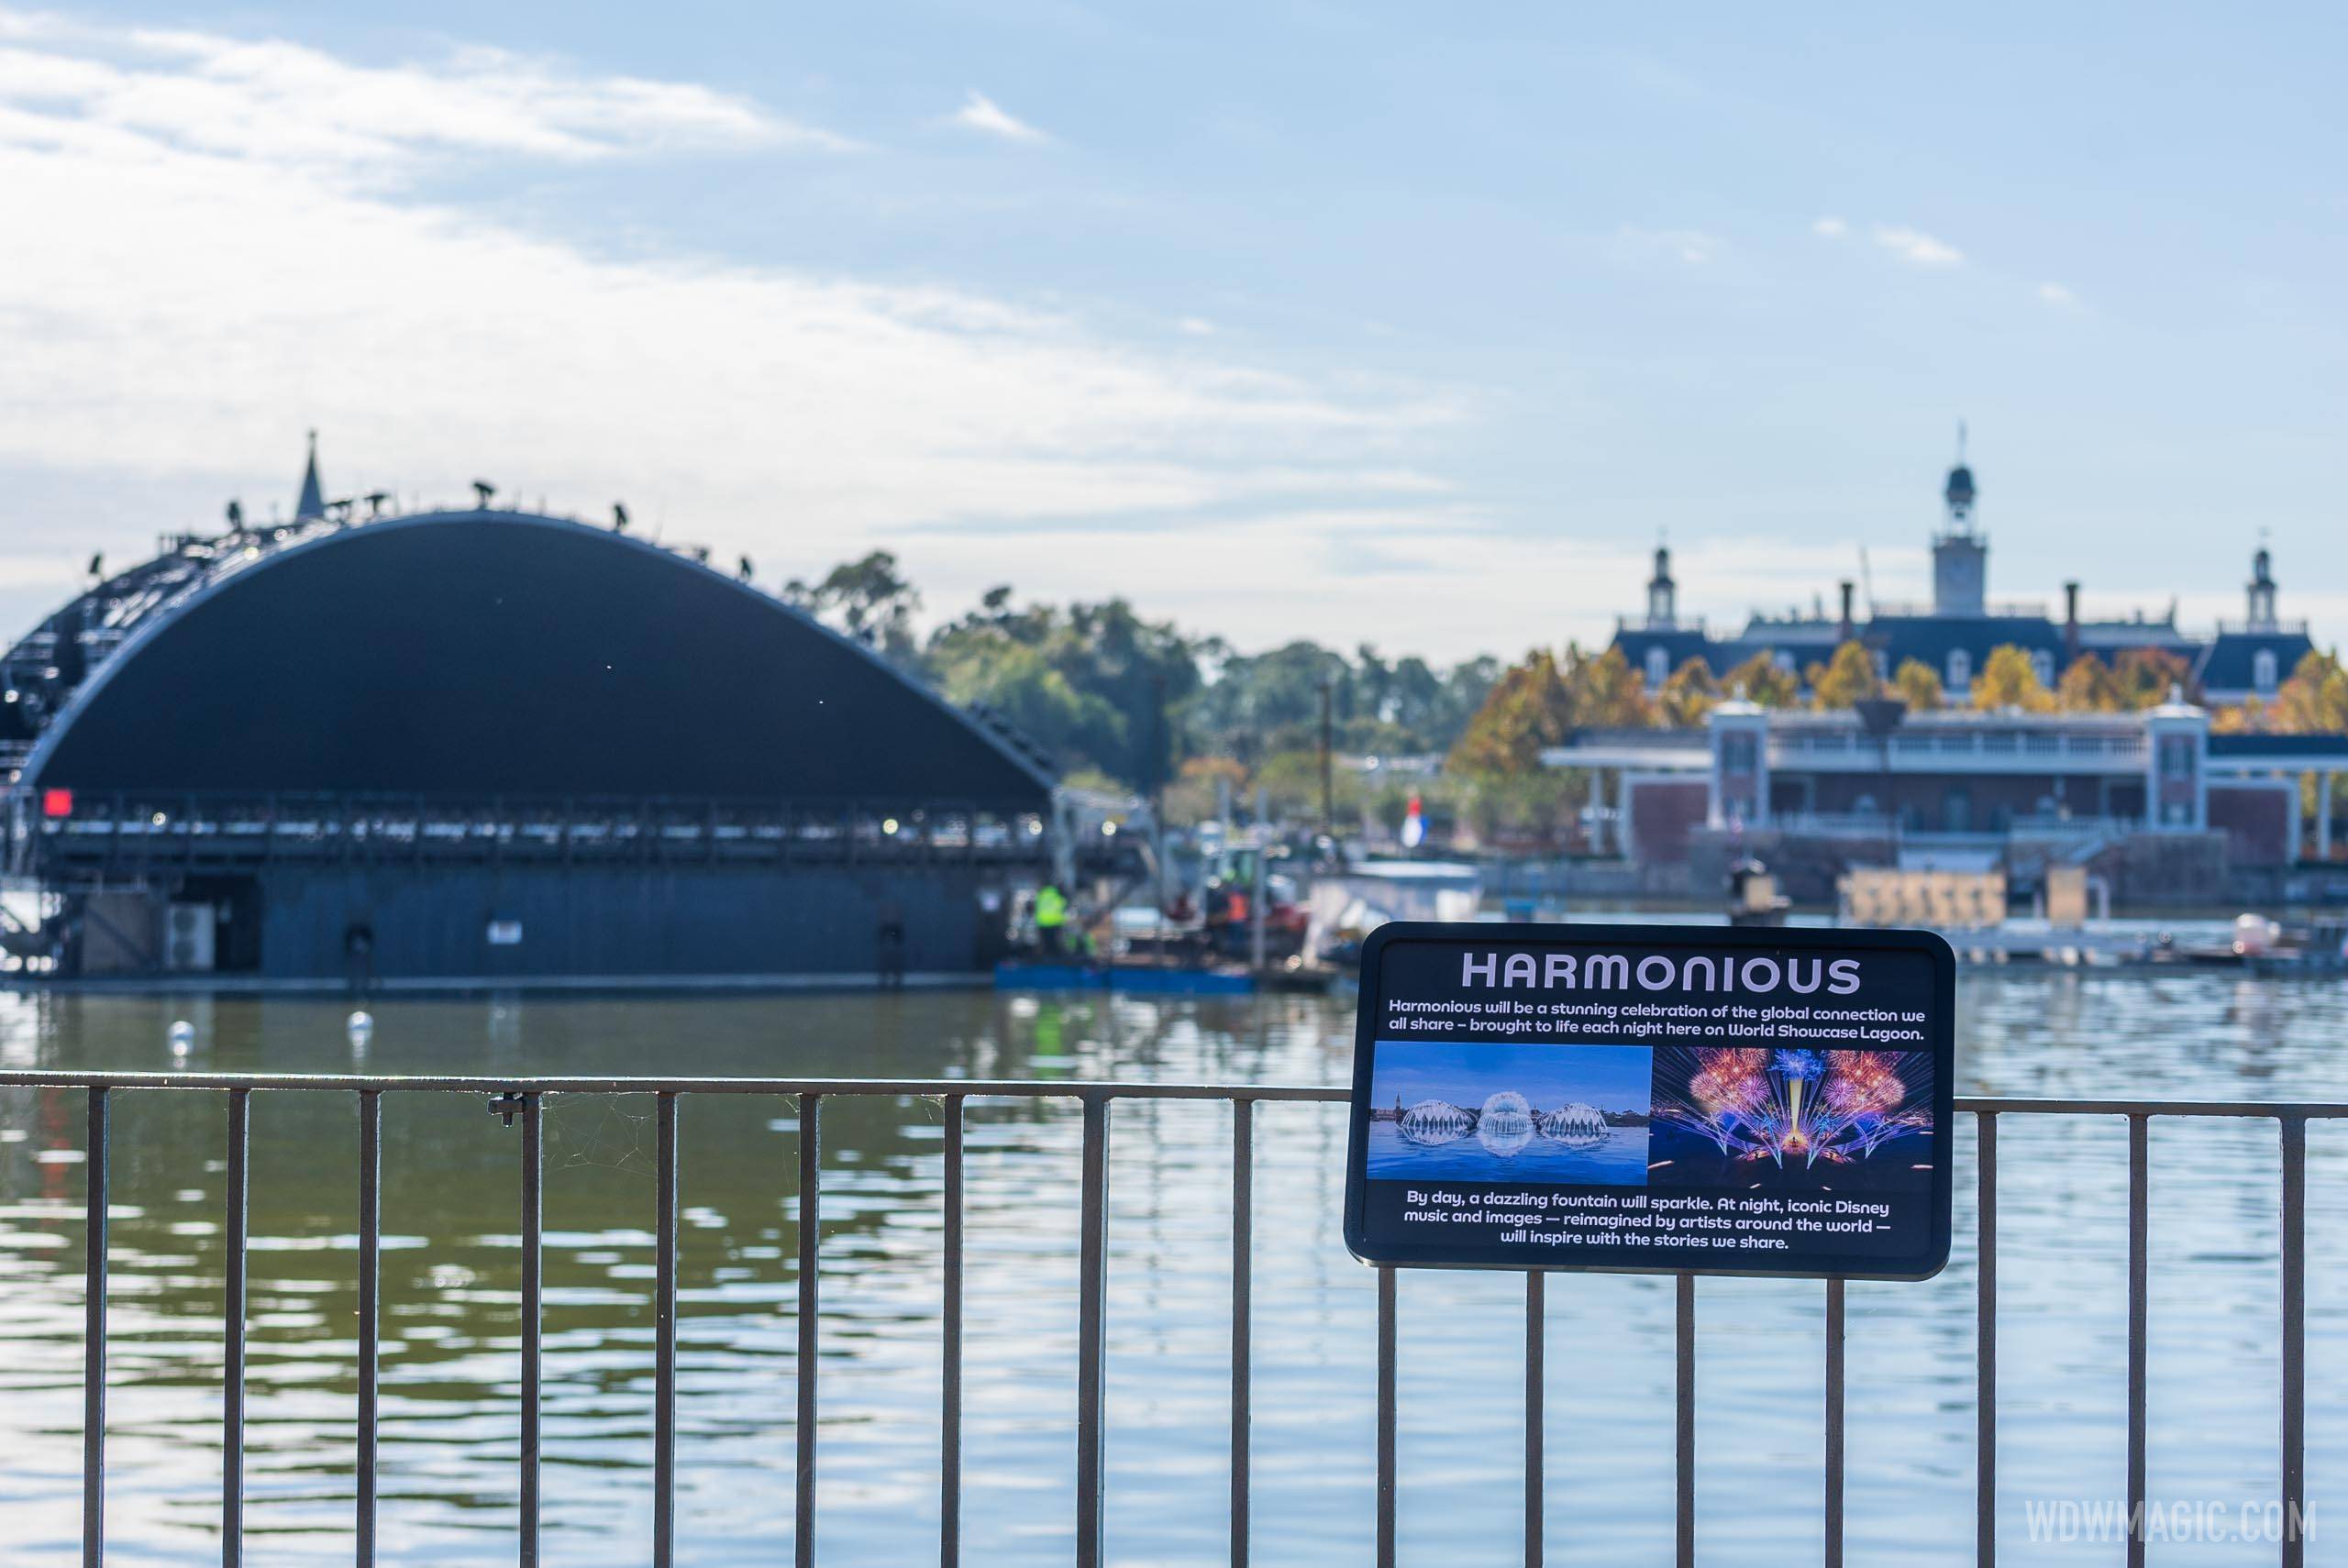 First harmonious show platform barge in World Showcase Lagoon